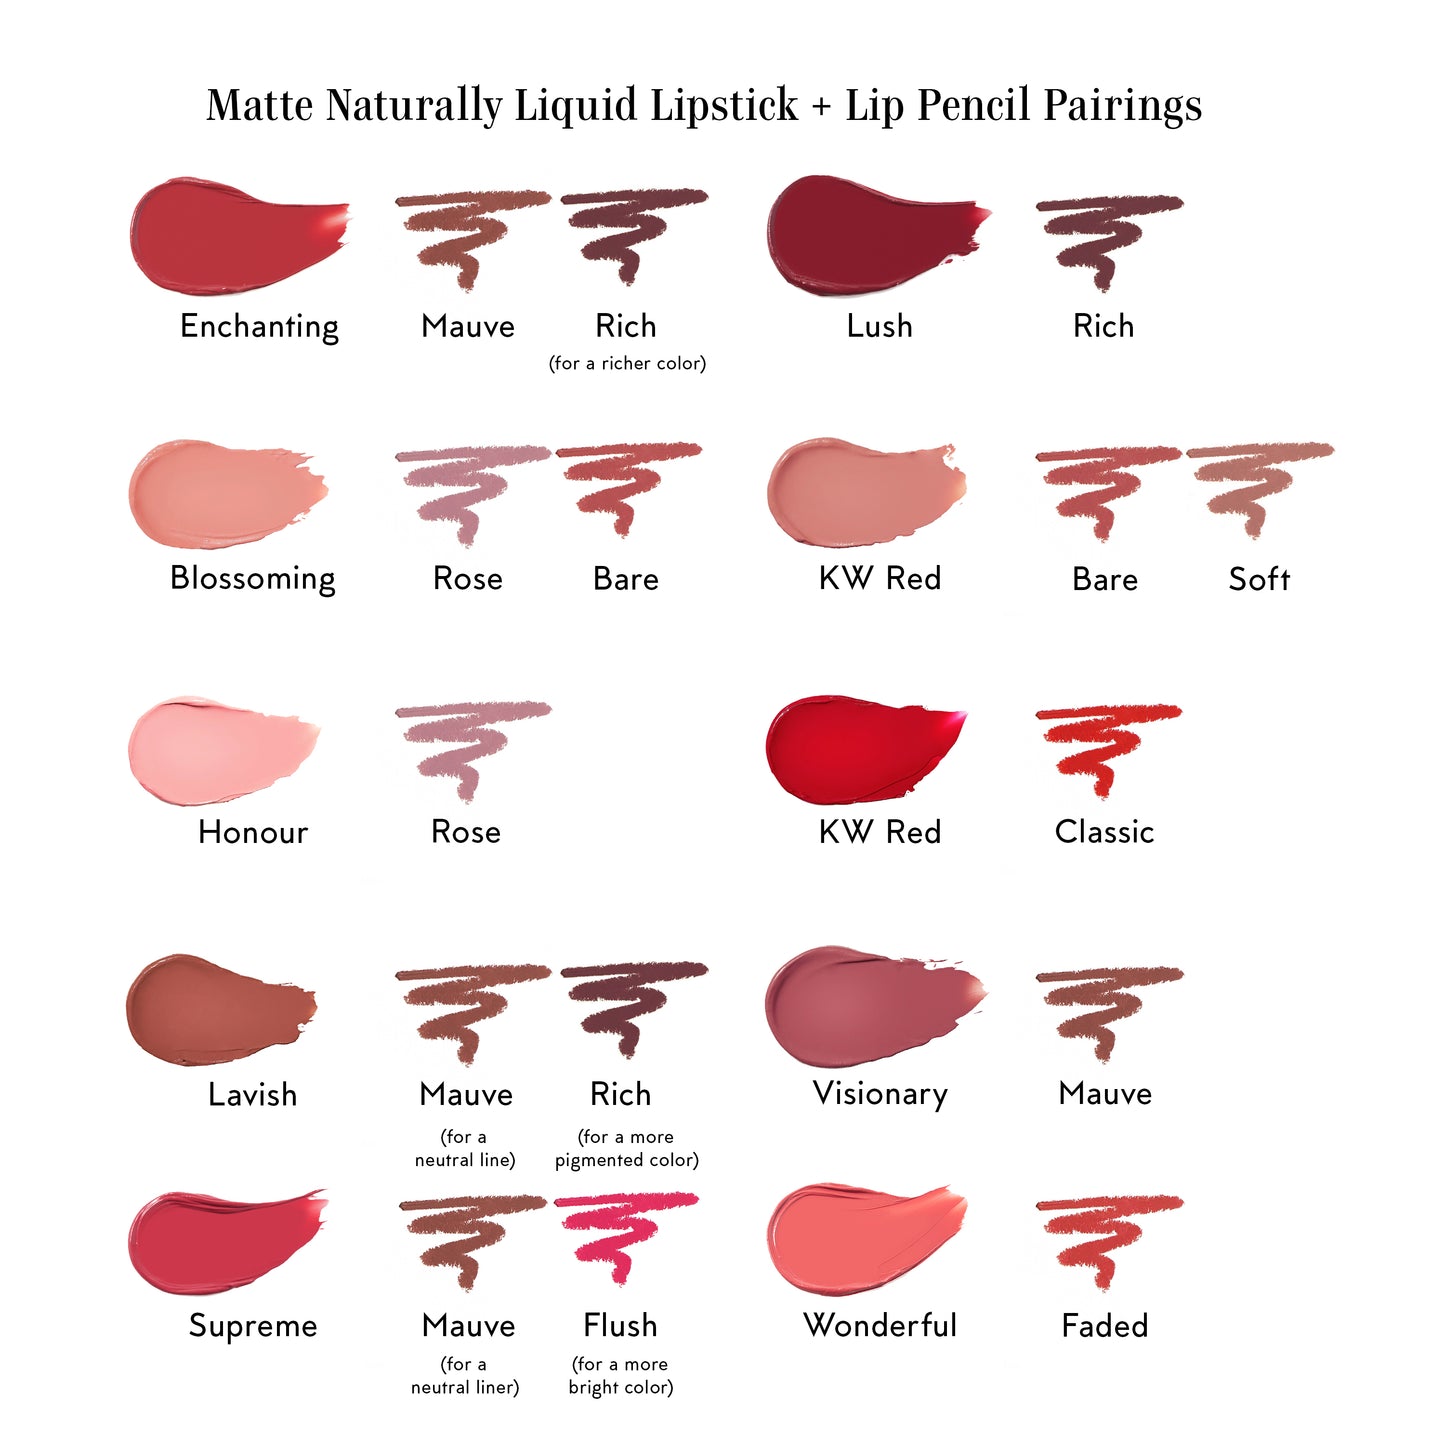 Matte, Naturally Liquid Lipstick--Wonderful